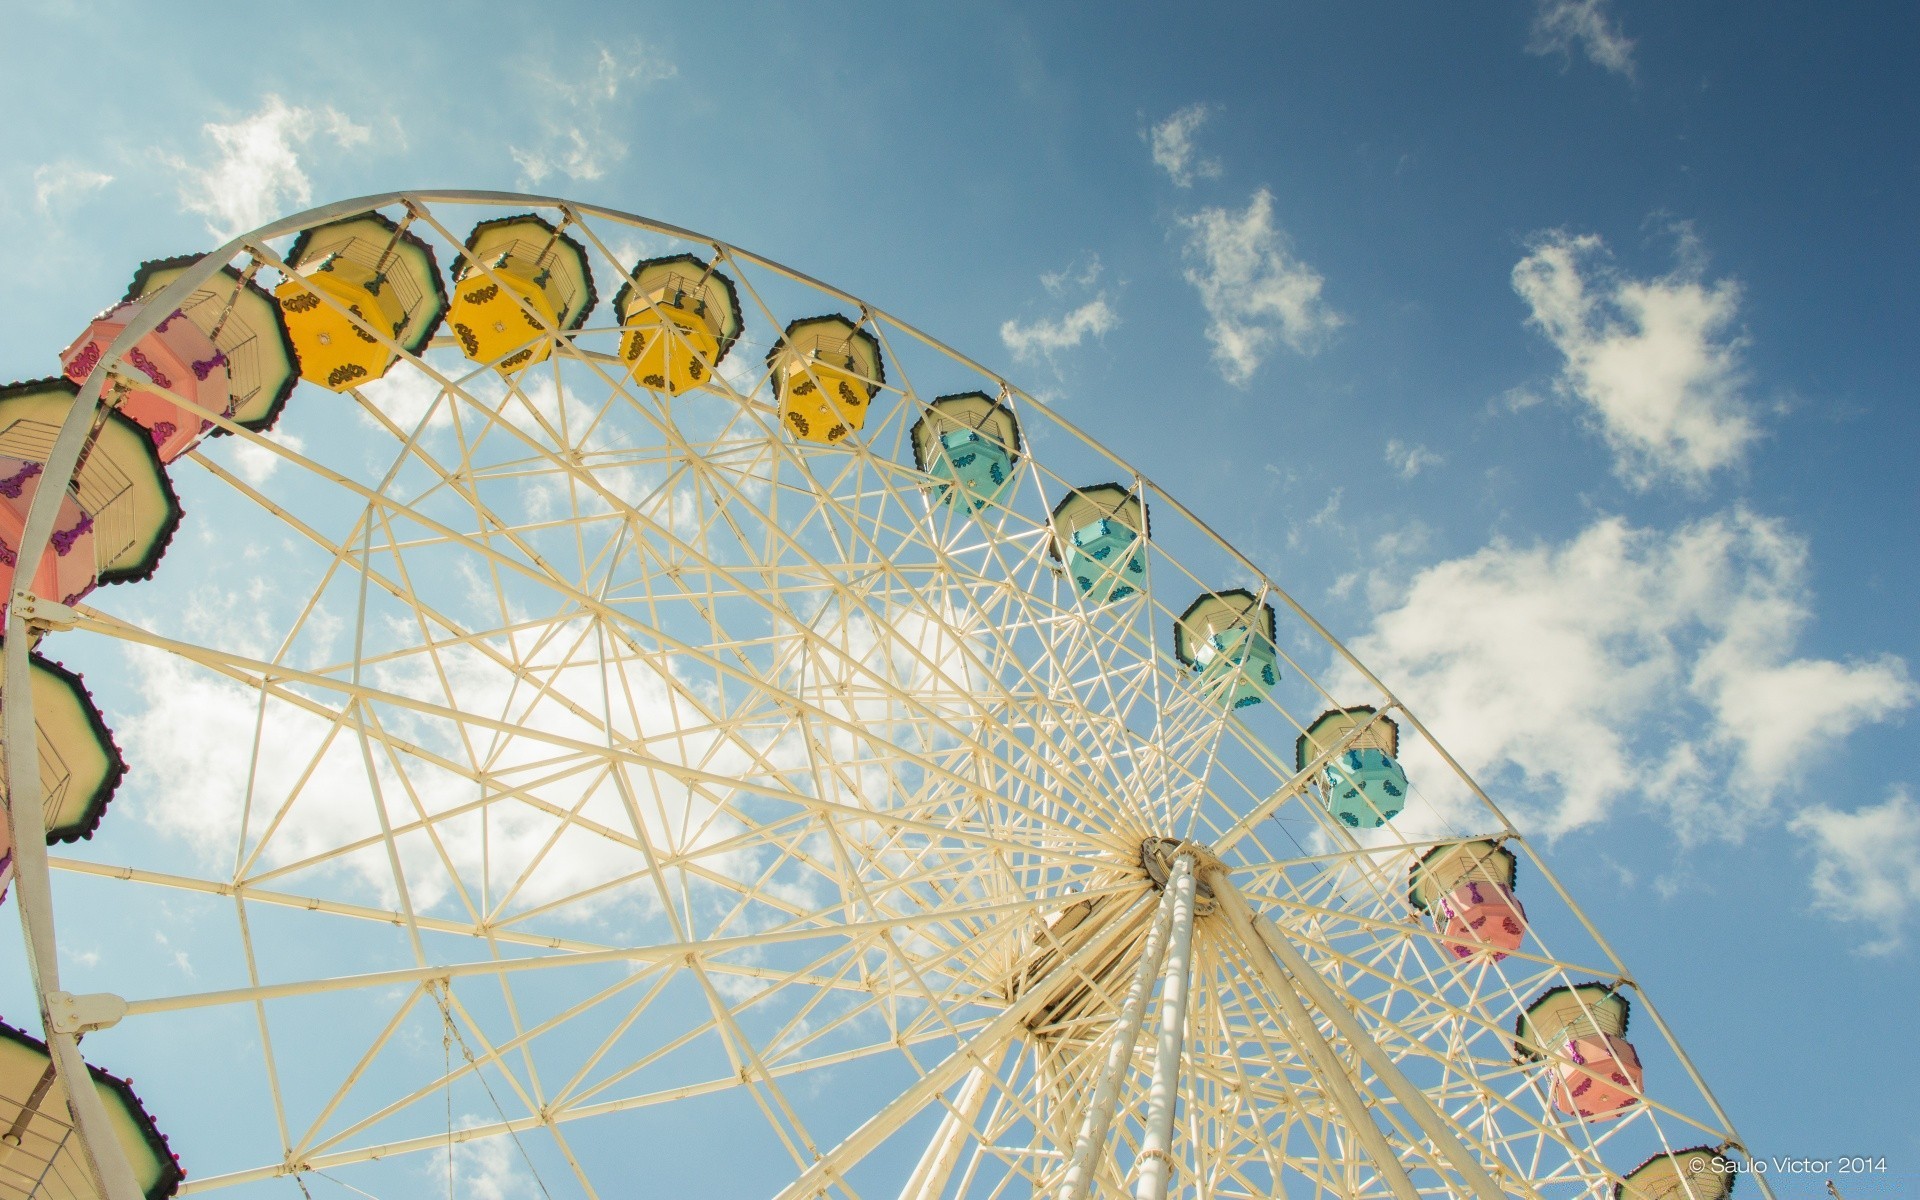 america carnival entertainment carousel fairground ferris wheel wheel circus fun exhilaration sky festival round spin leisure pleasure high observation height